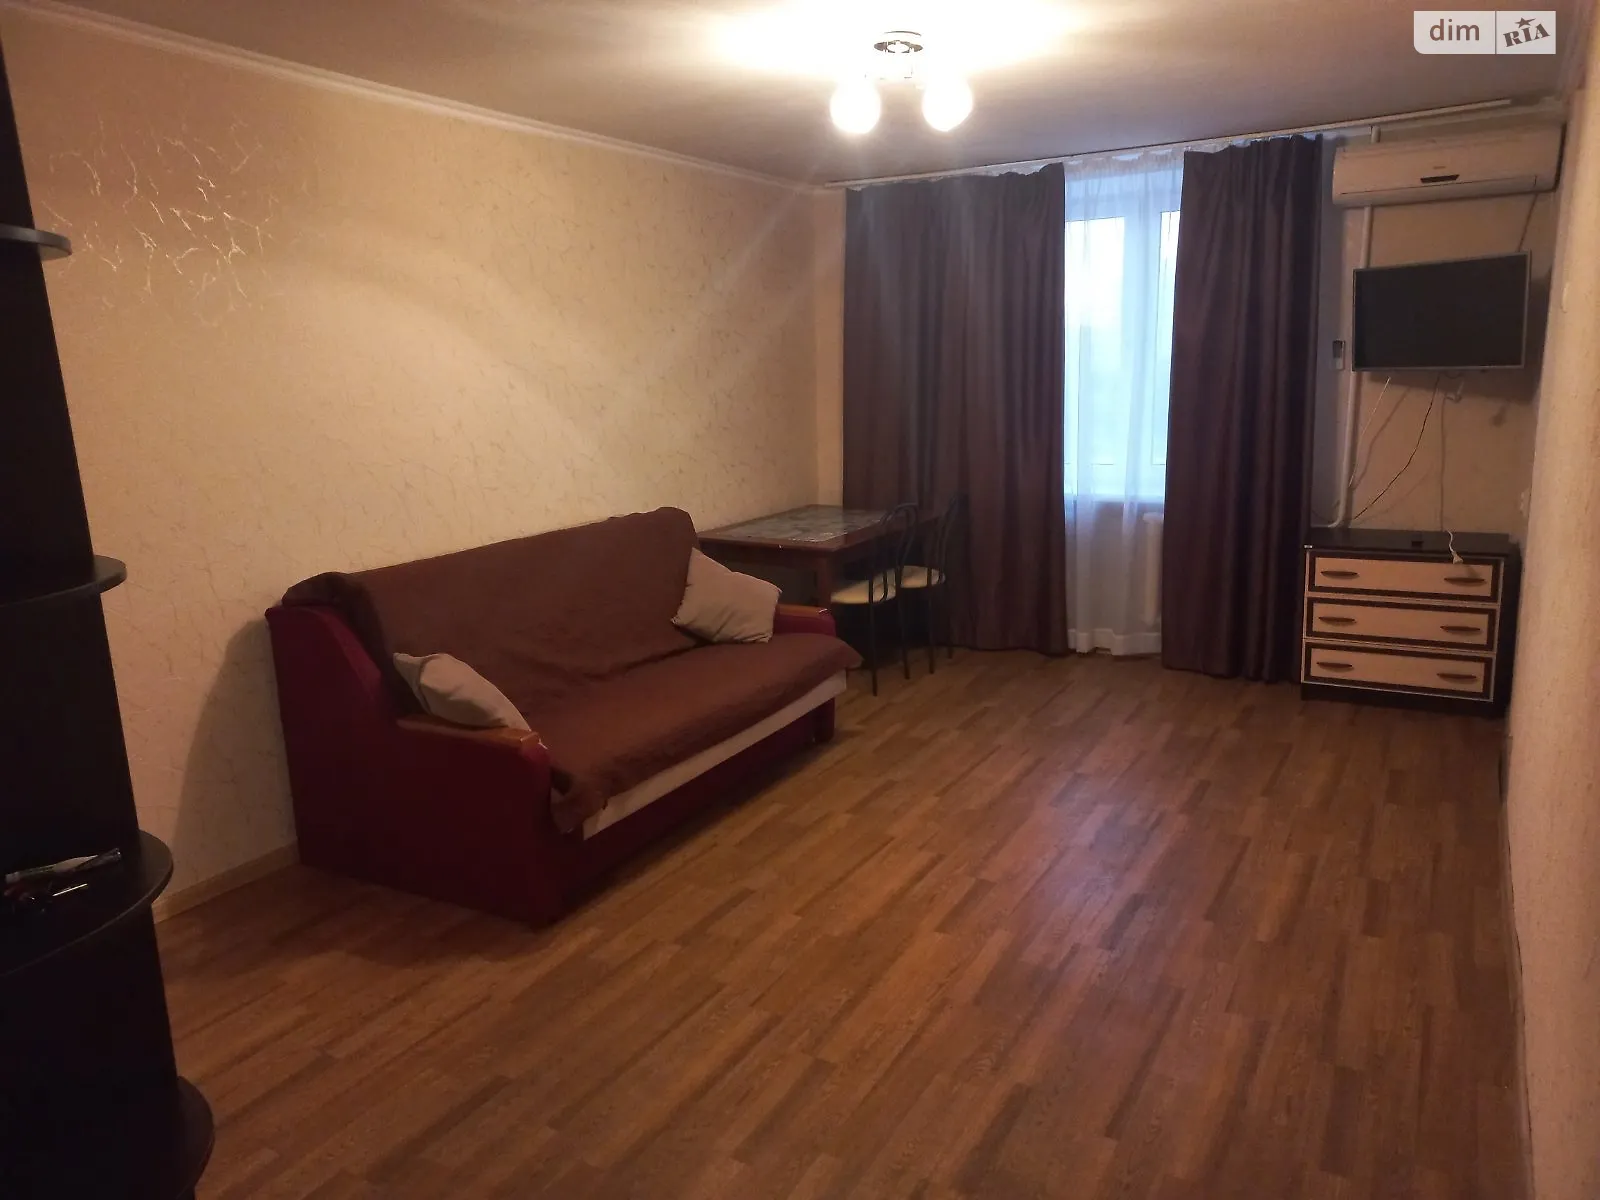 Сдается в аренду 1-комнатная квартира 40 кв. м в Одессе, ул. Академика Вильямса, 76Б - фото 1